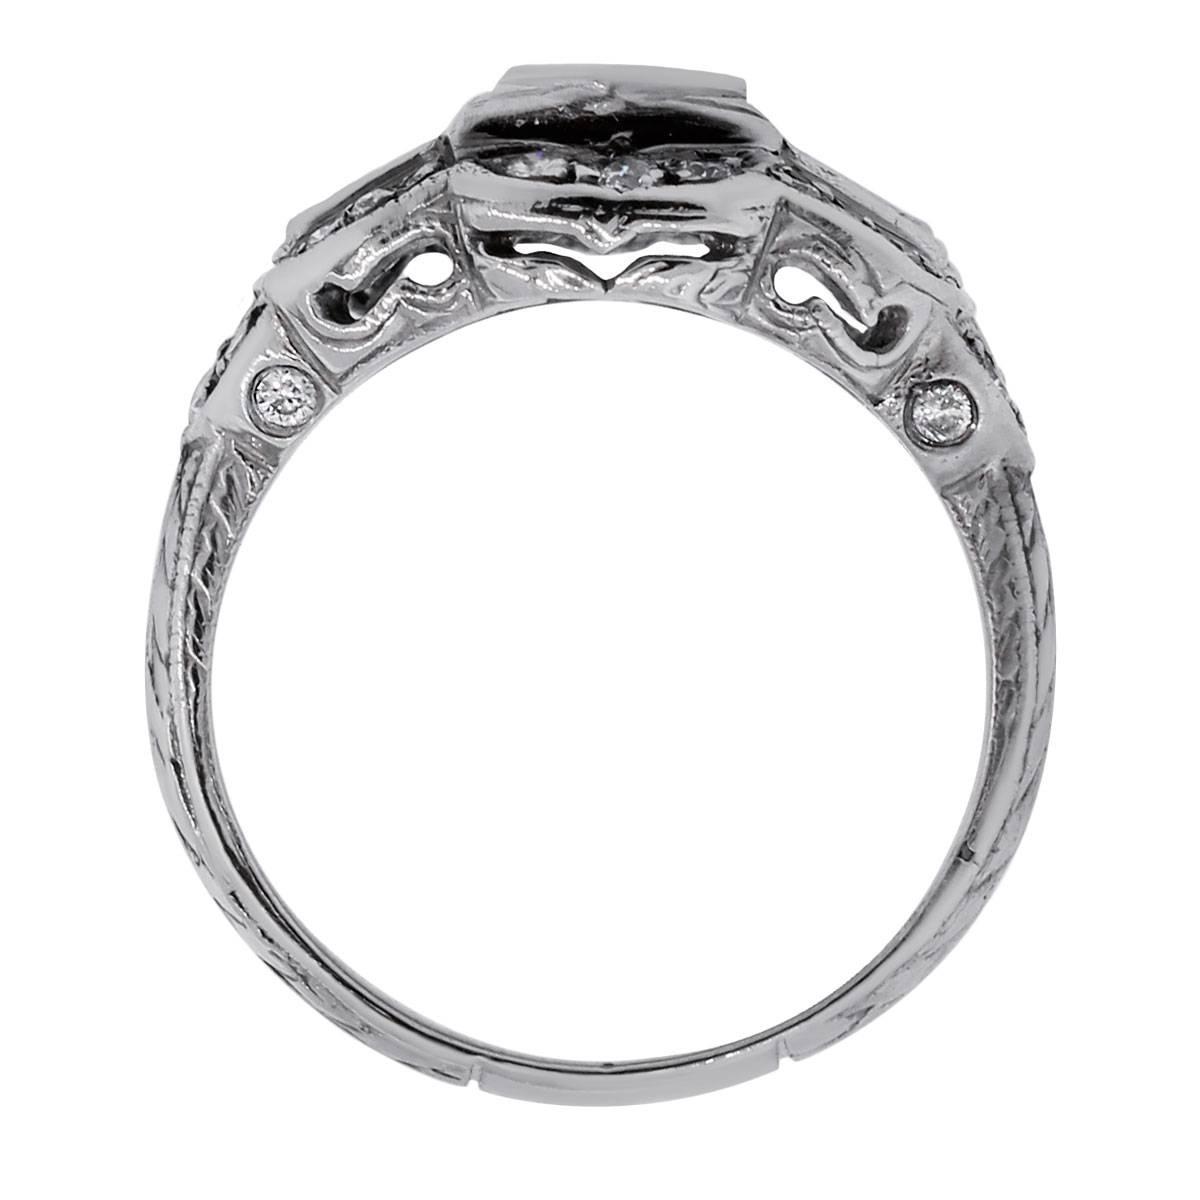 1.00 Carats GIA Cert Diamonds Platinum Ring For Sale at 1stdibs